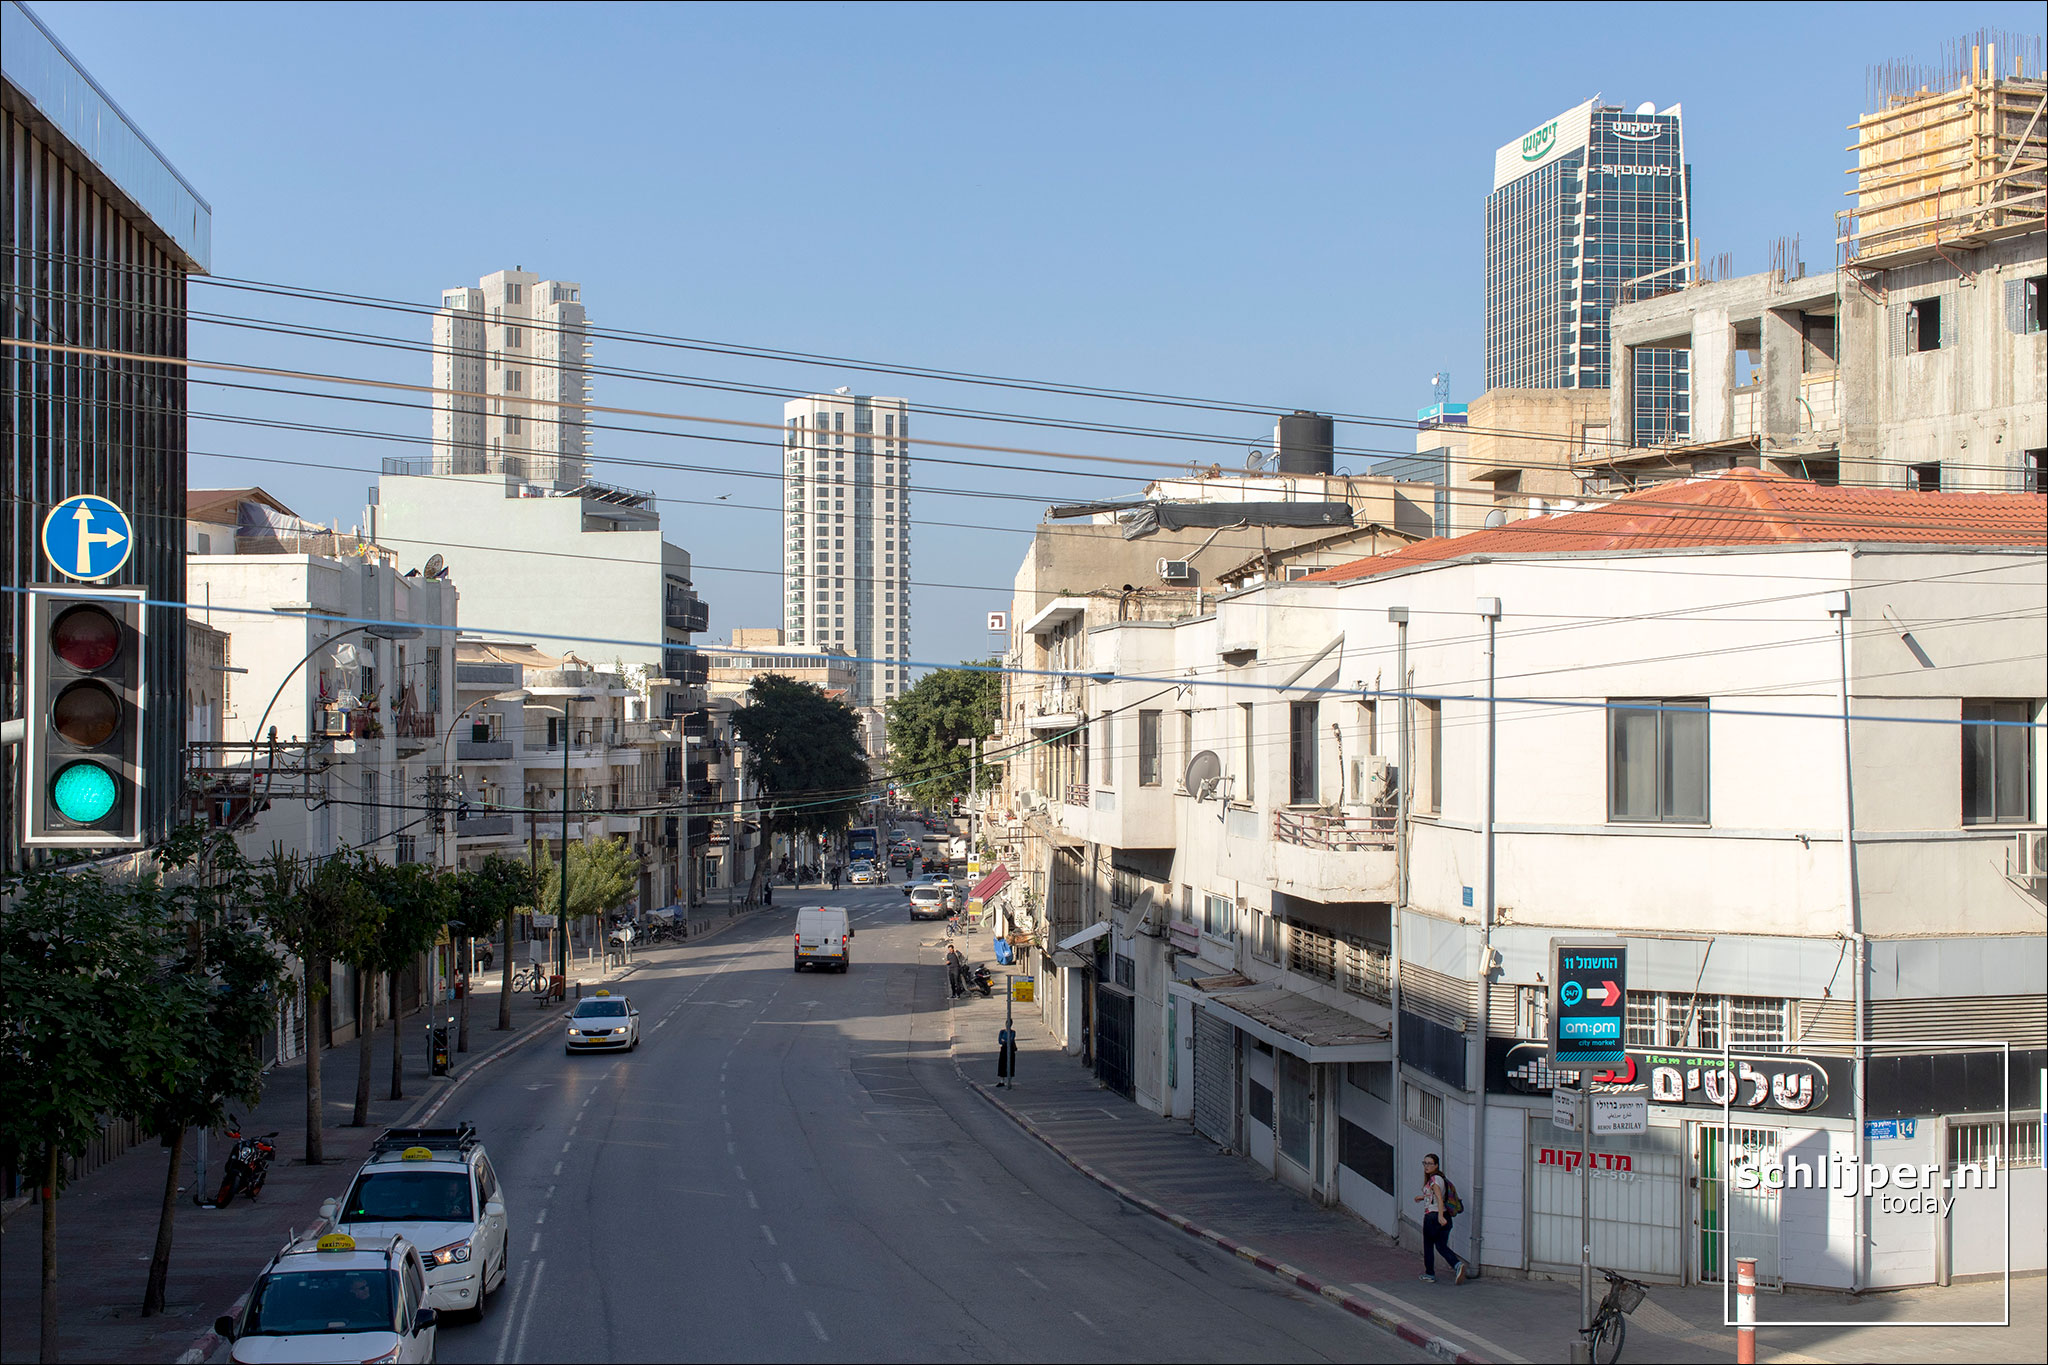 Israel, Tel Aviv, 5 februari 2019